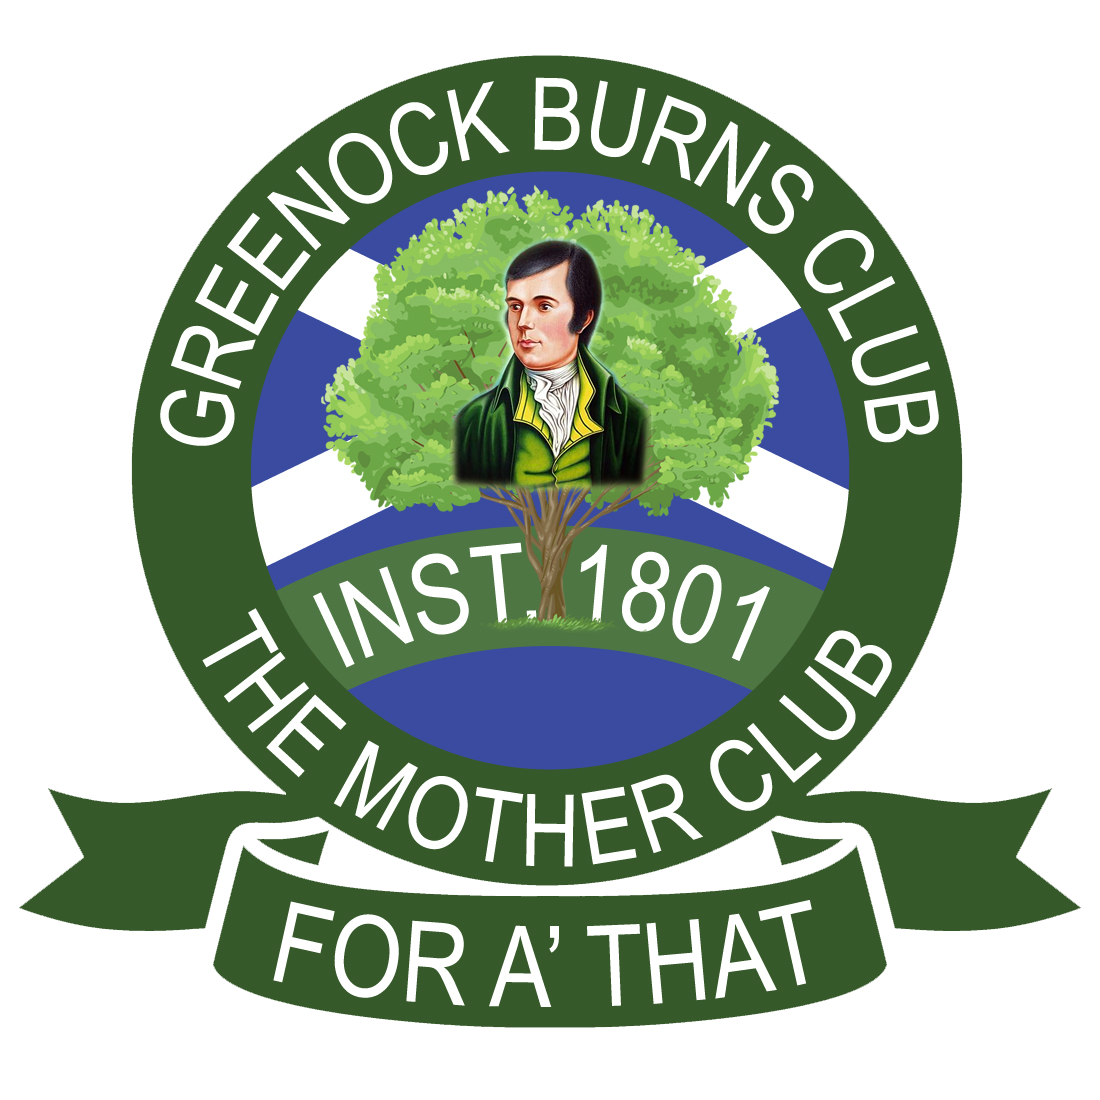 Greenock Burns Club (The Mother Club)